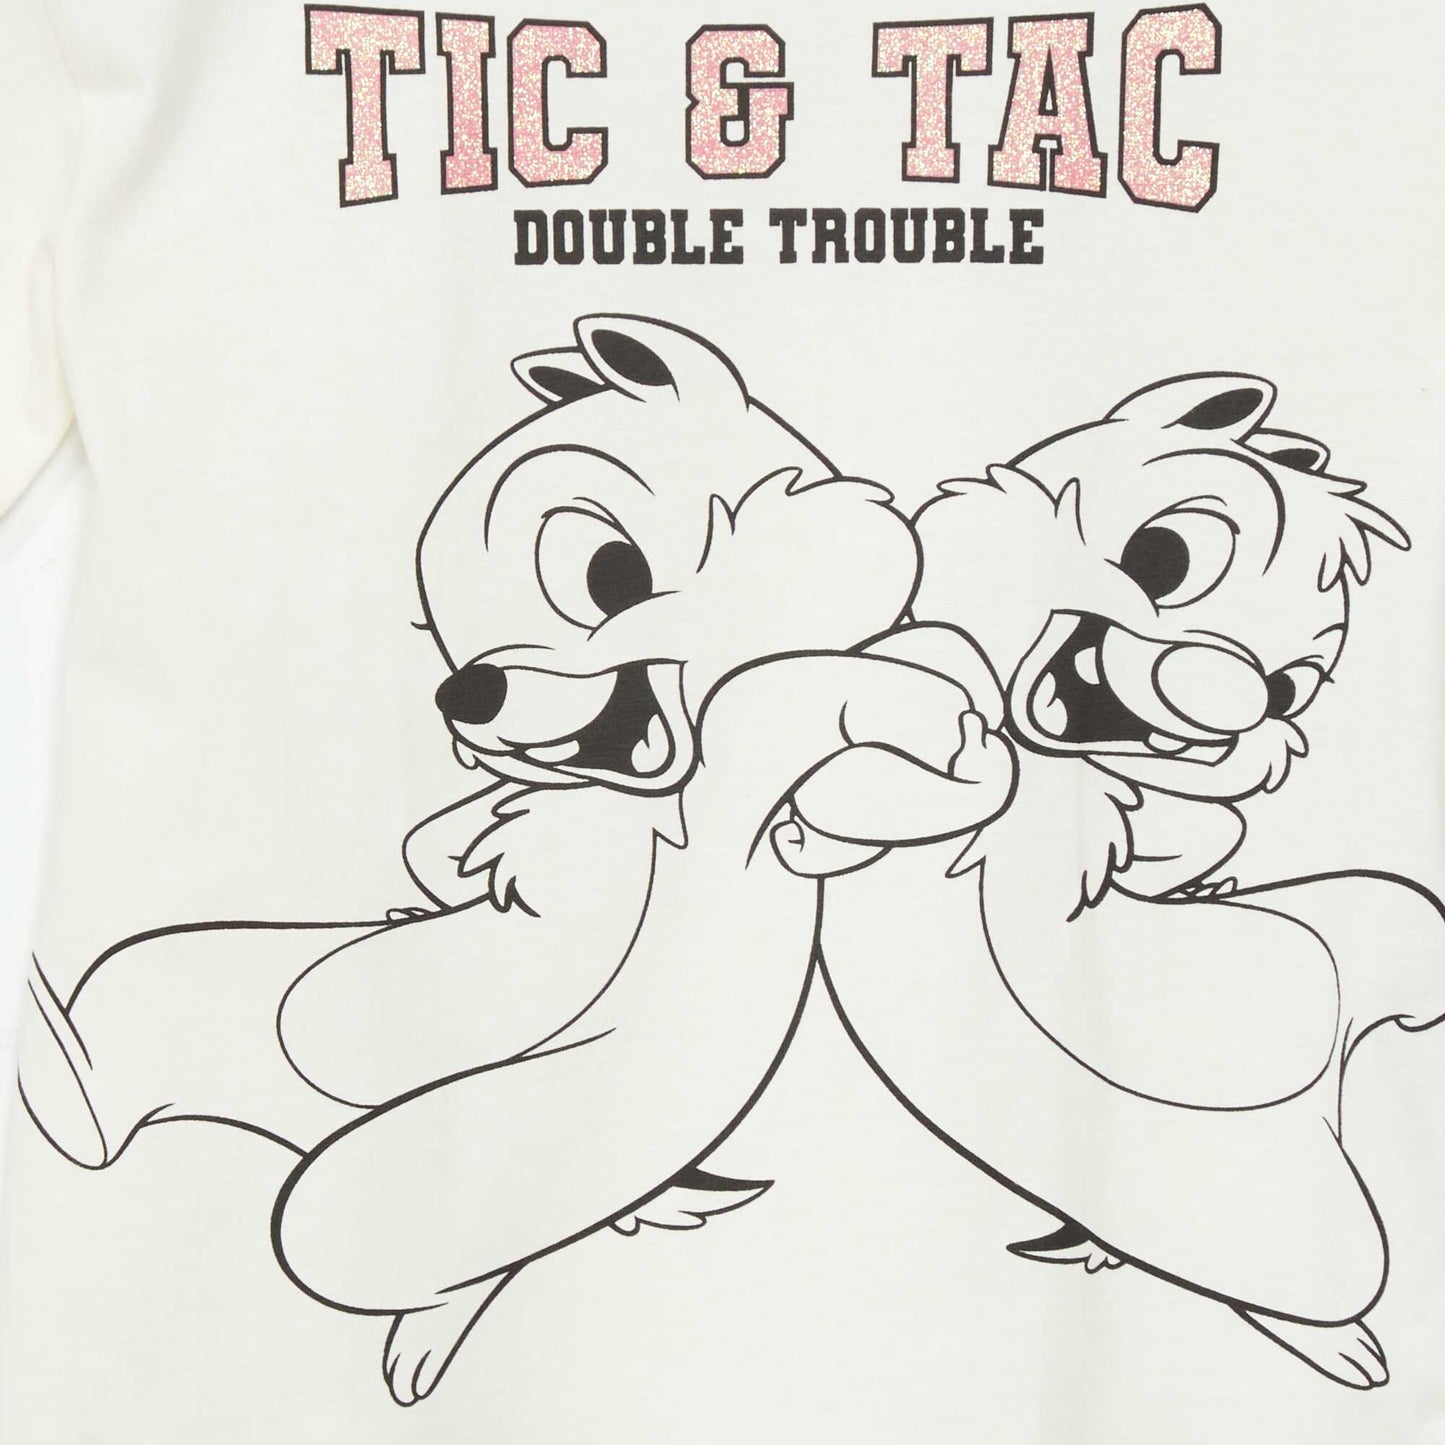 Tee-shirt 'Disney' Beige